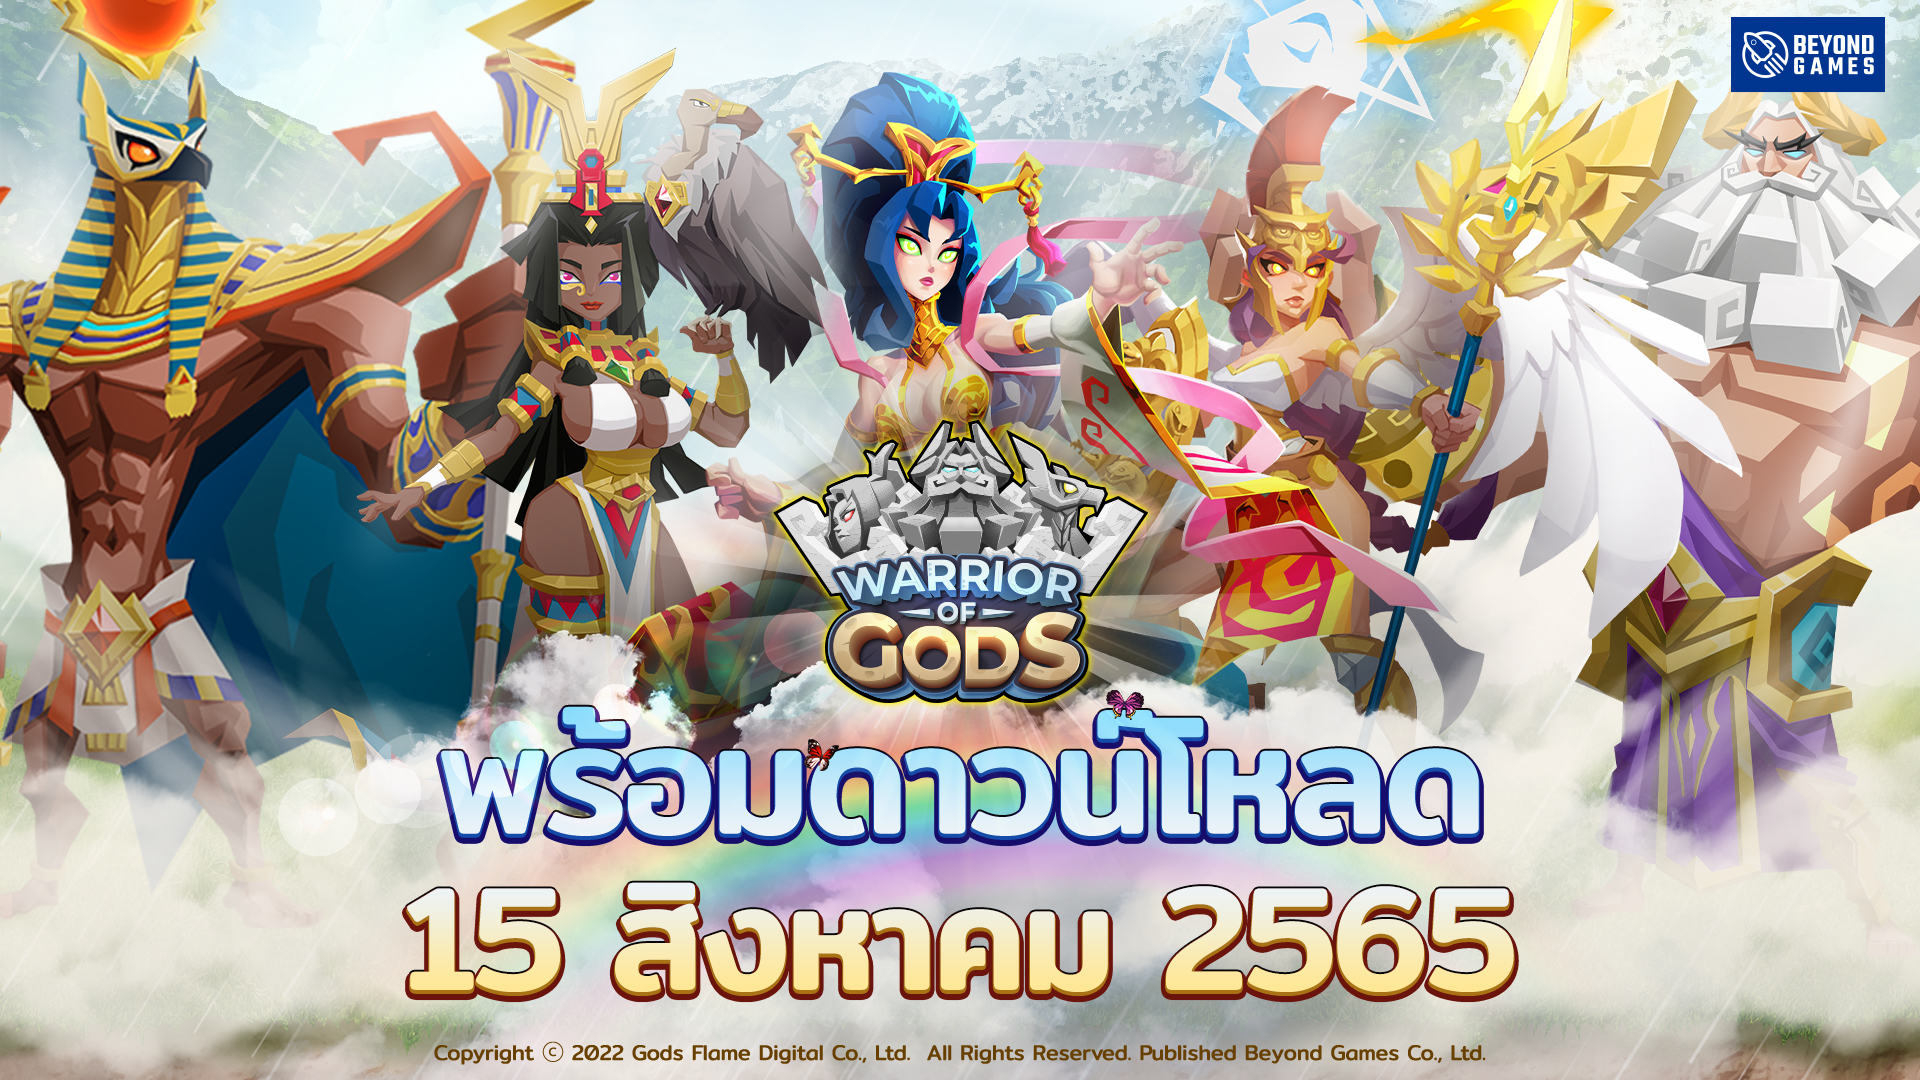 Warrior of Gods เปิดให้ดาวน์โหลดแล้ว เล่นได้พร้อมกัน 15 สิงหาคมนี้ บน Google Play Store (AOS) 